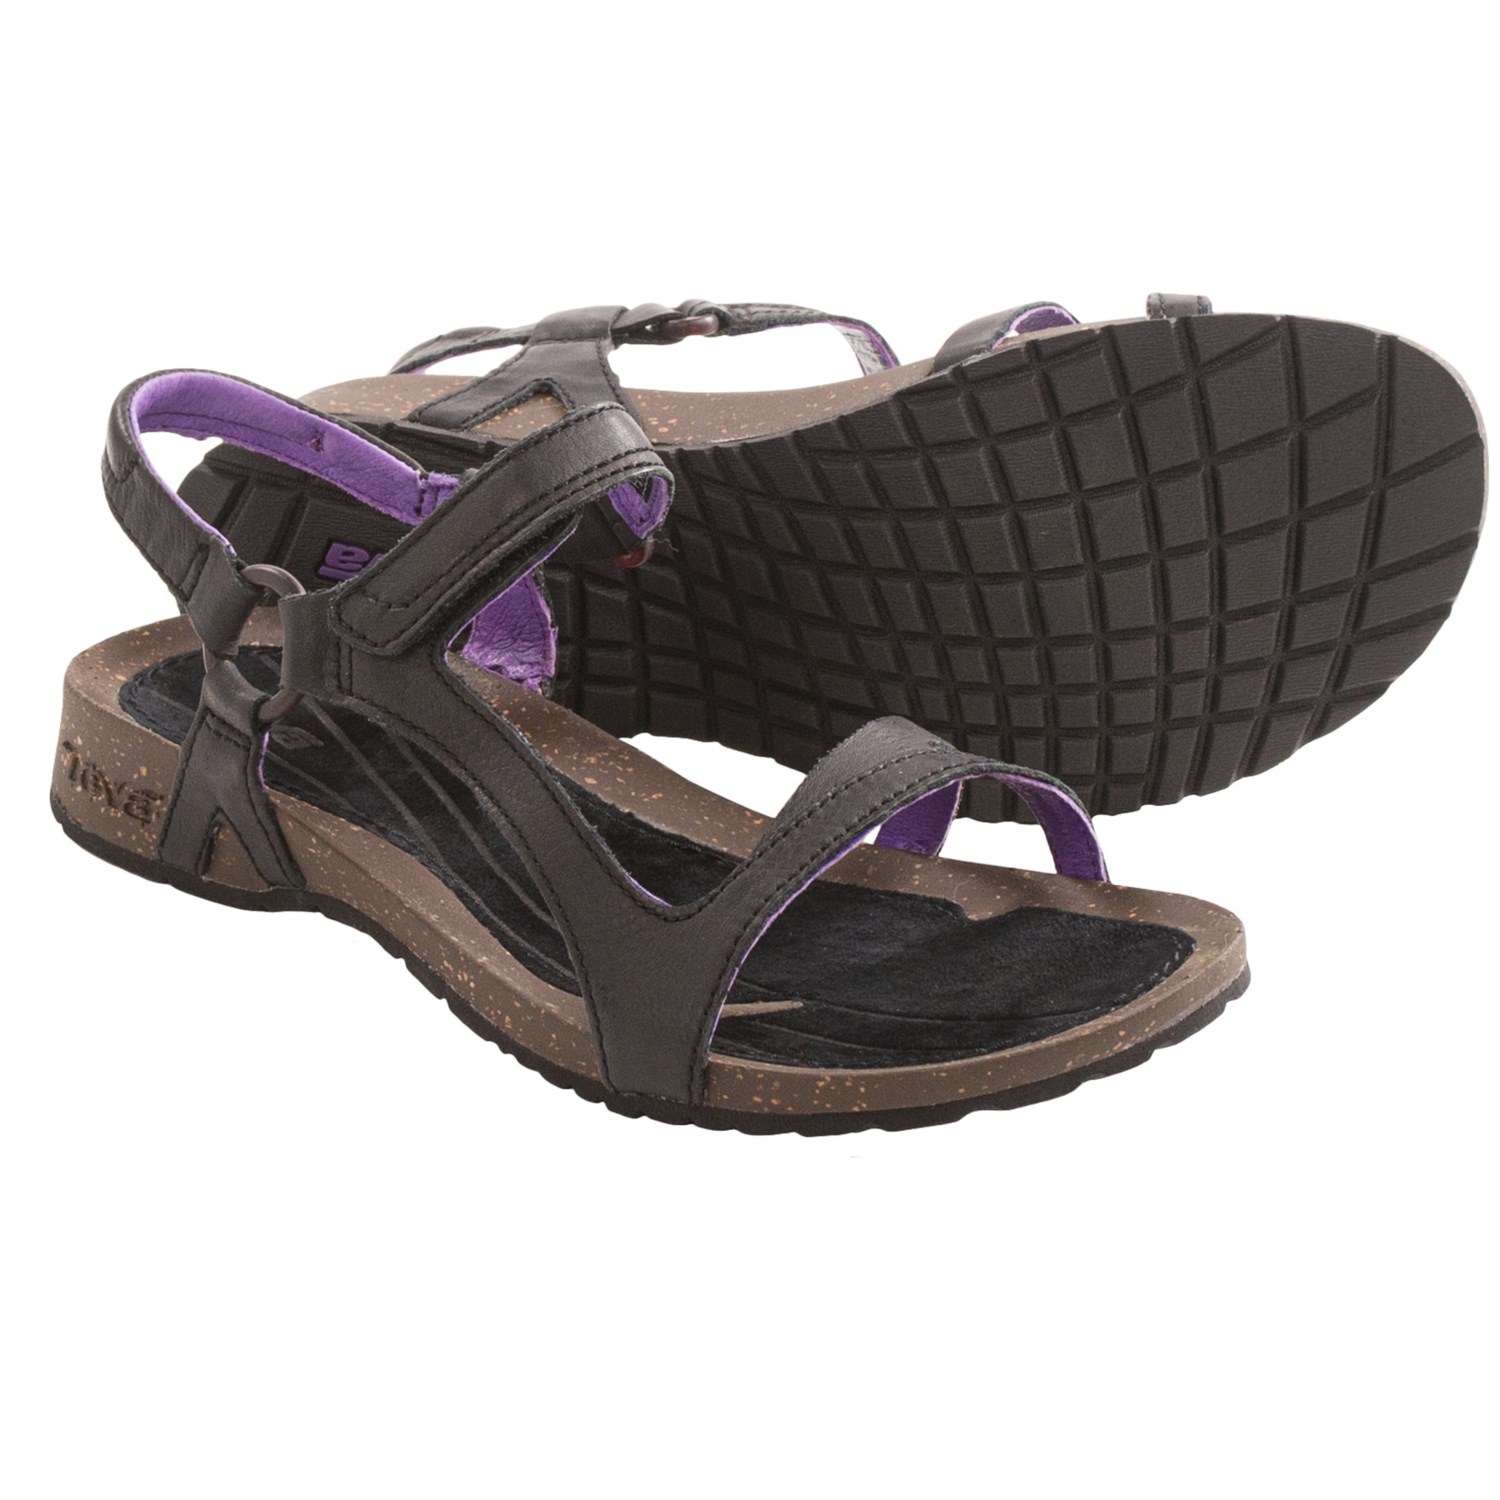 Teva Cabrillo Universal Sandals - Leather (For Women) in BlackPurple